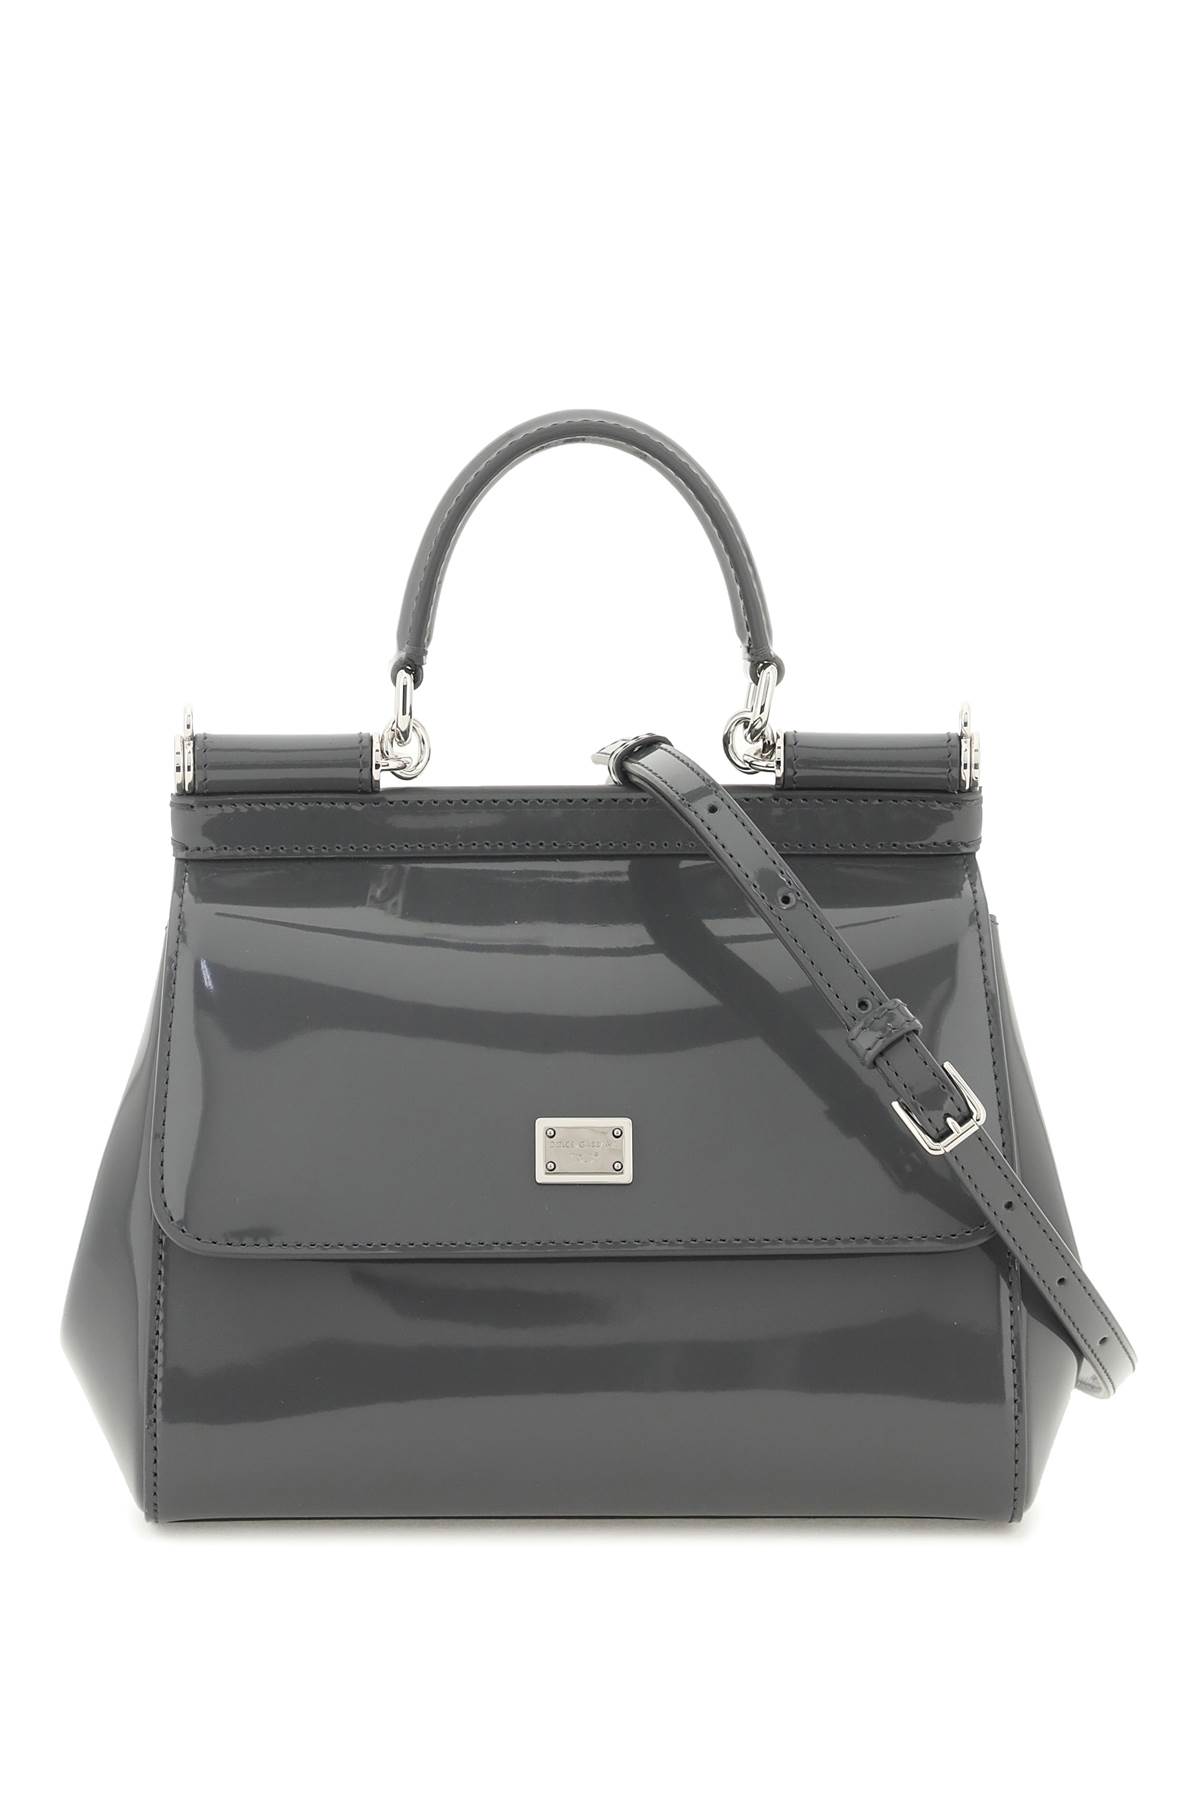 Dolce & Gabbana Patent Leather sicily Handbag